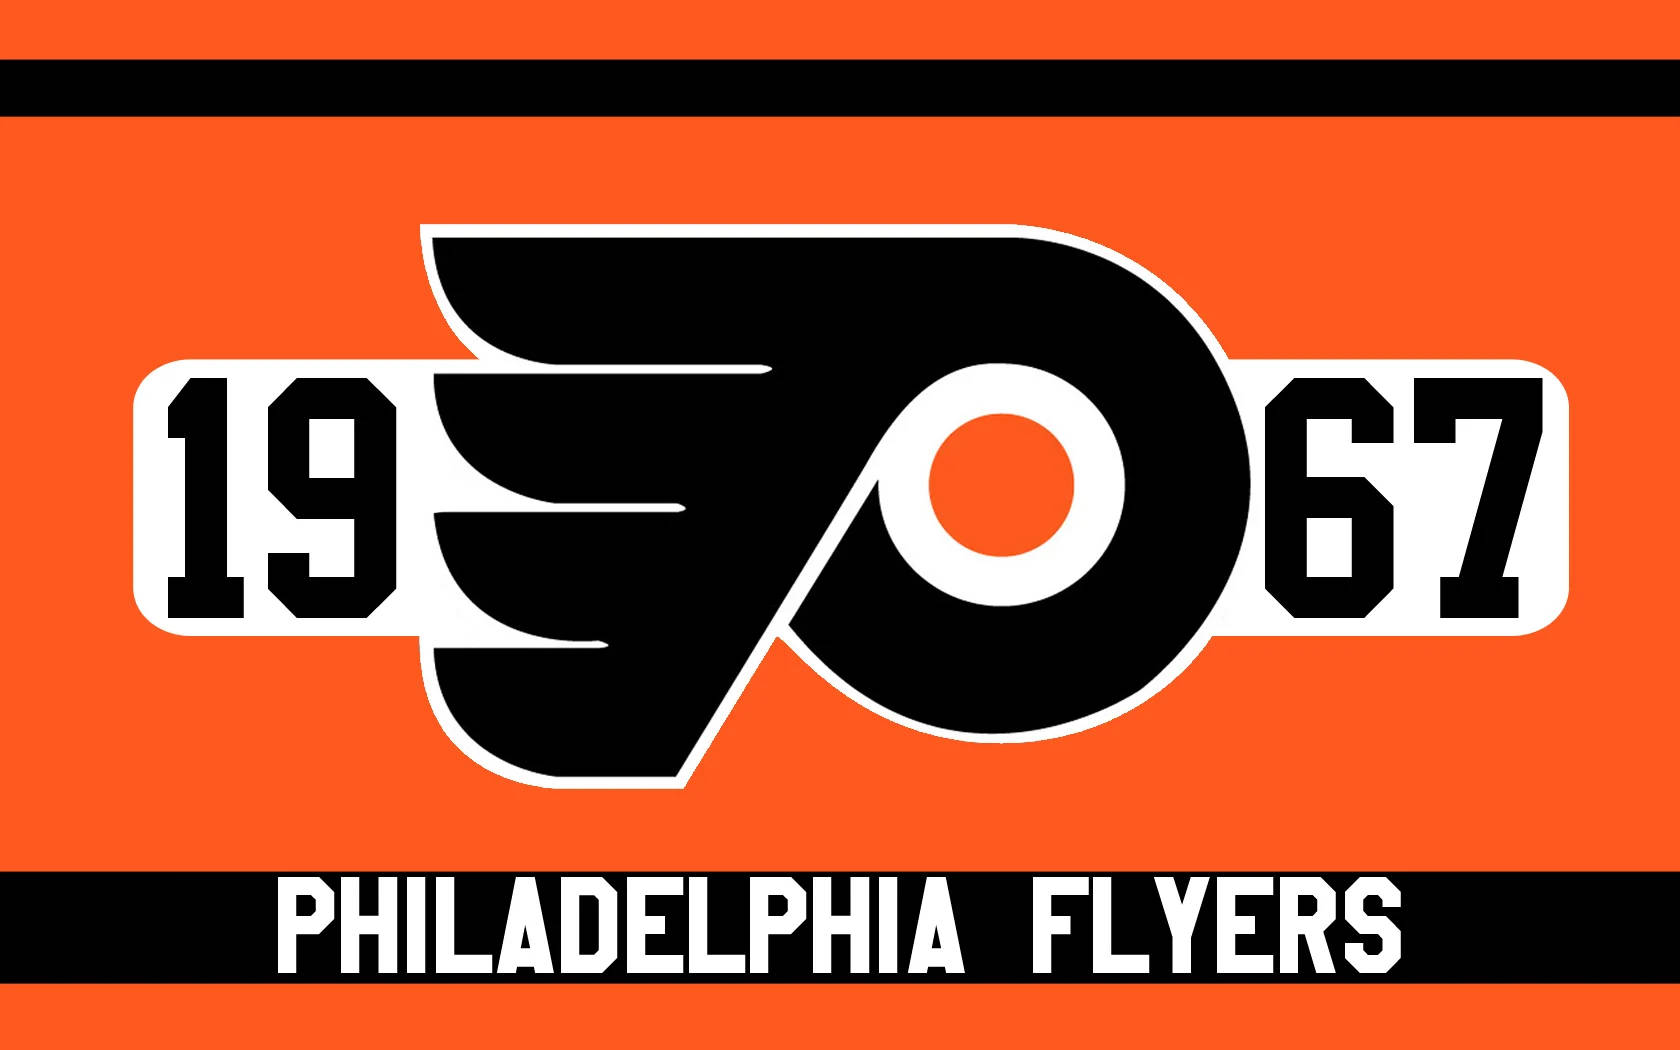 Philadelphia Flyers 1967 Logo - Classic Heritage